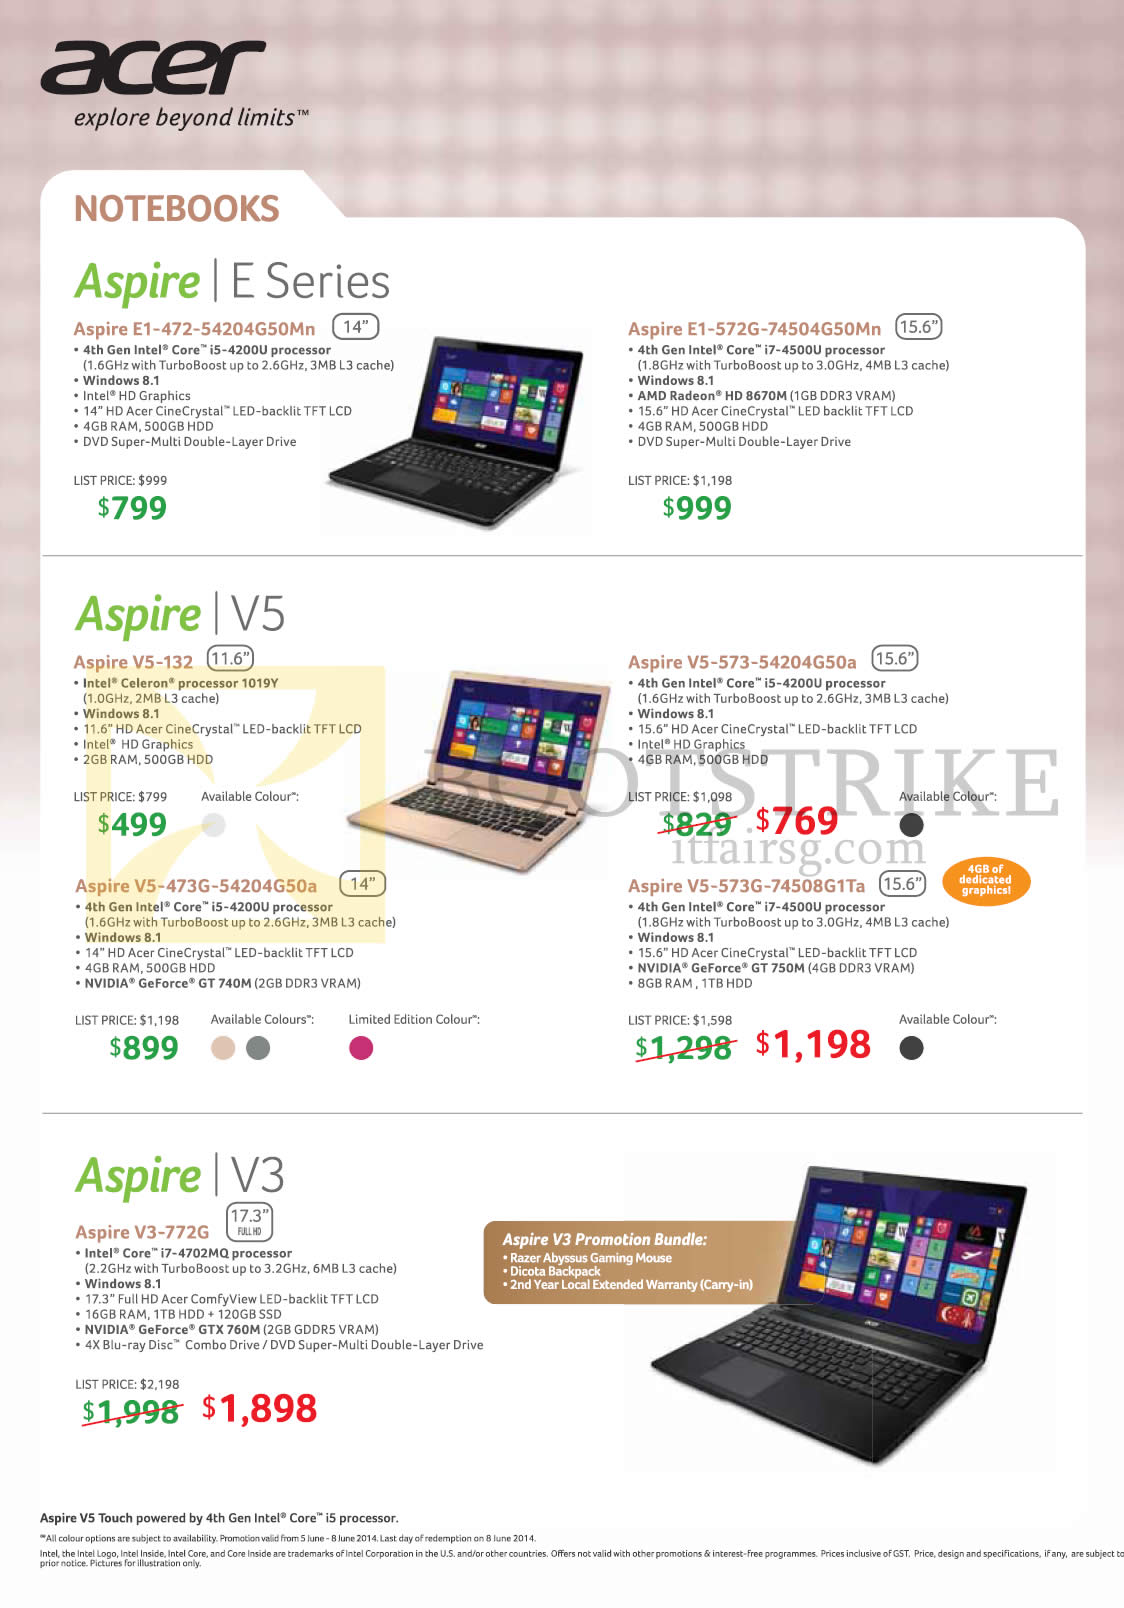 PC SHOW 2014 price list image brochure of Acer Notebooks Aspire E1-472-54204G50Mn, E1-572G-74504G50Mn, V5-132, V5-473G-54204G50a, V5-573-54204G50a, 573G-74508G1Ta, V3-772G